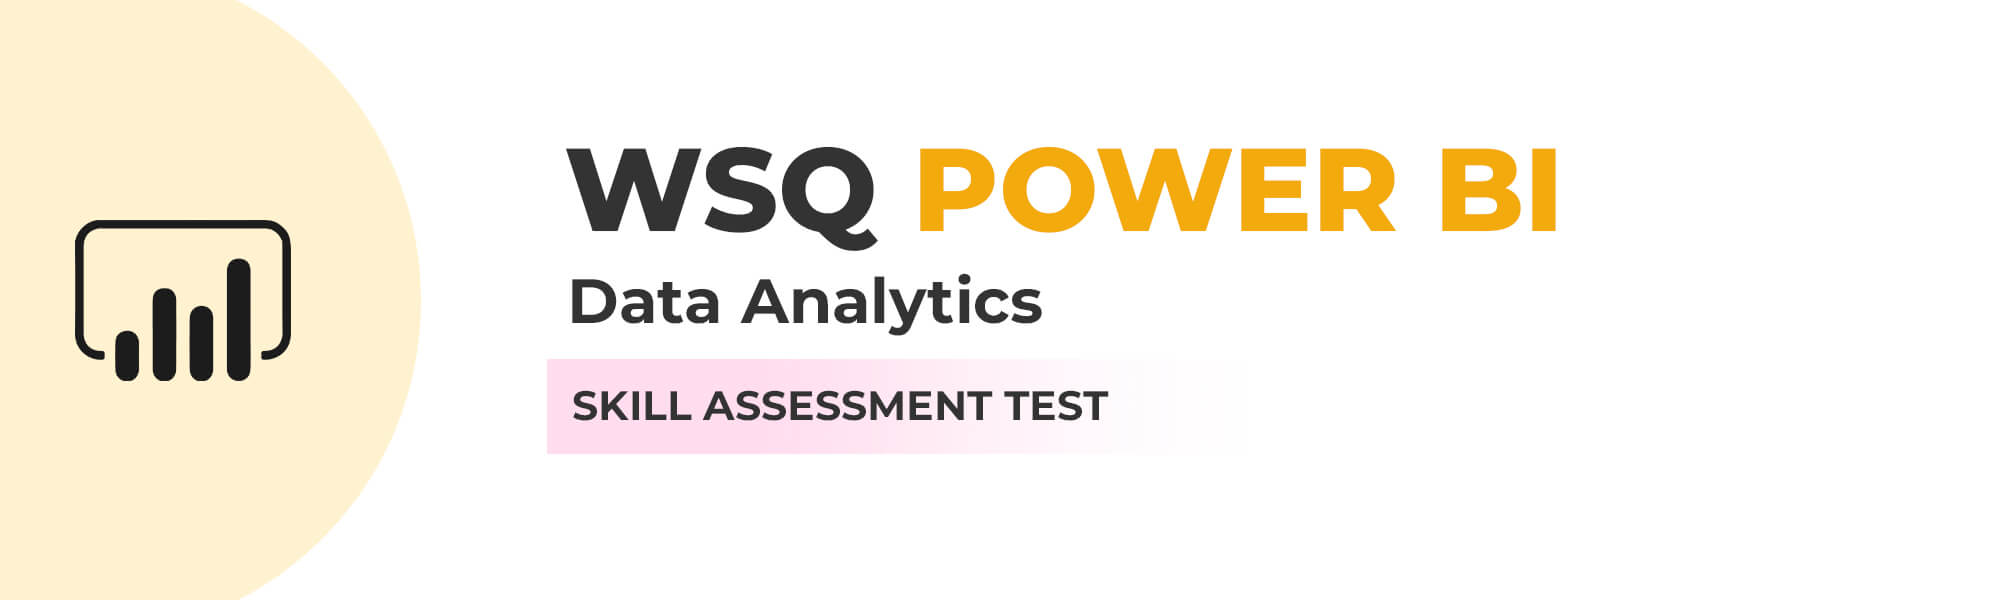 Basic or Intermediate Microsoft Excel Skill Assessment Test